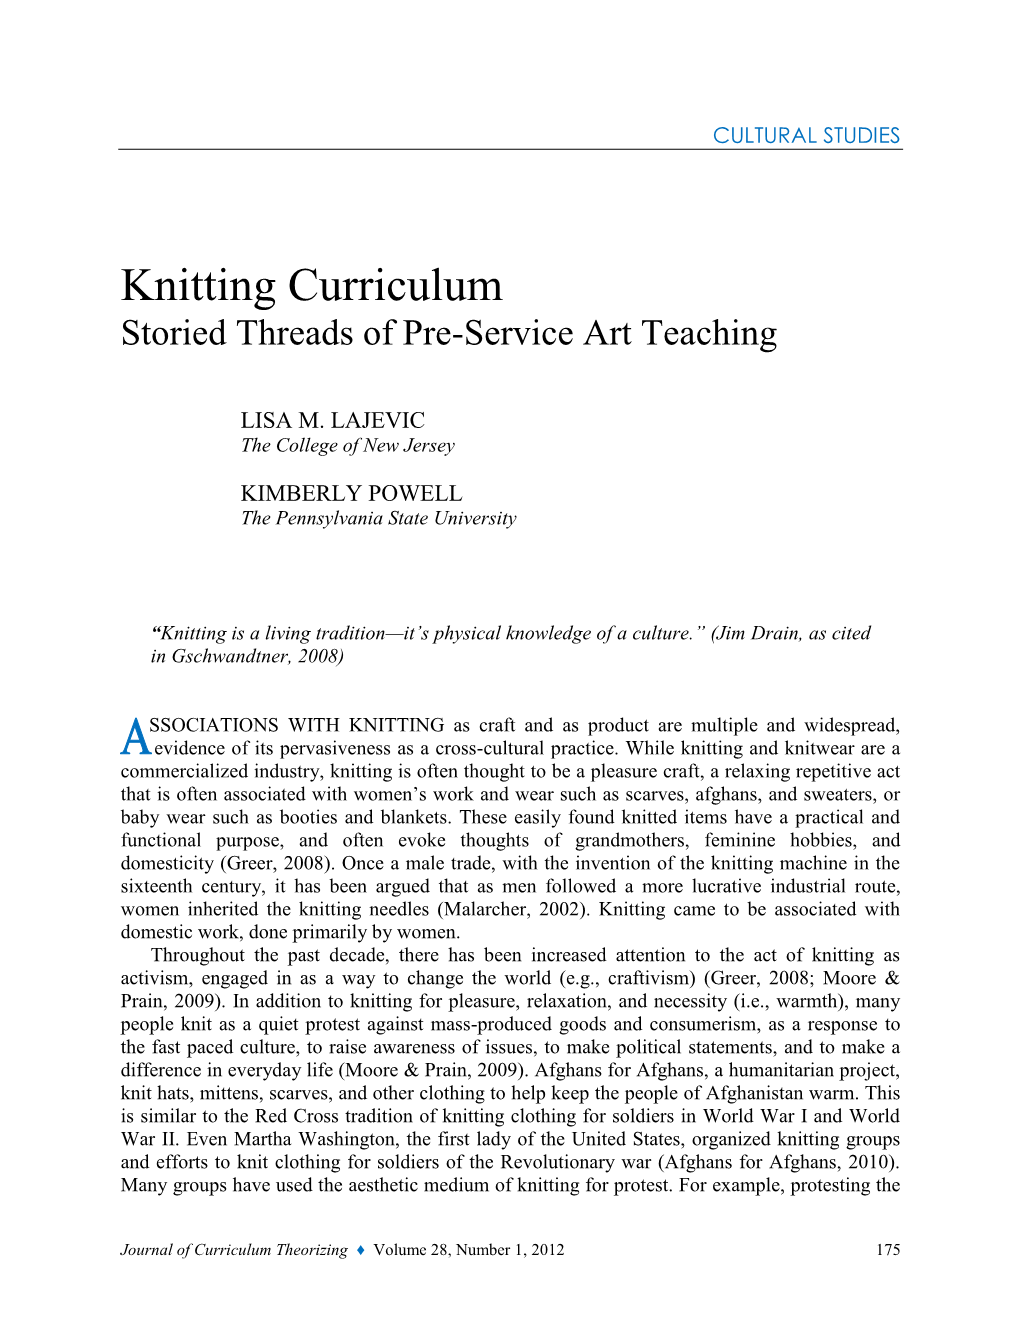 Knitting Curriculum Storied Threads of Pre-Service Art Teaching